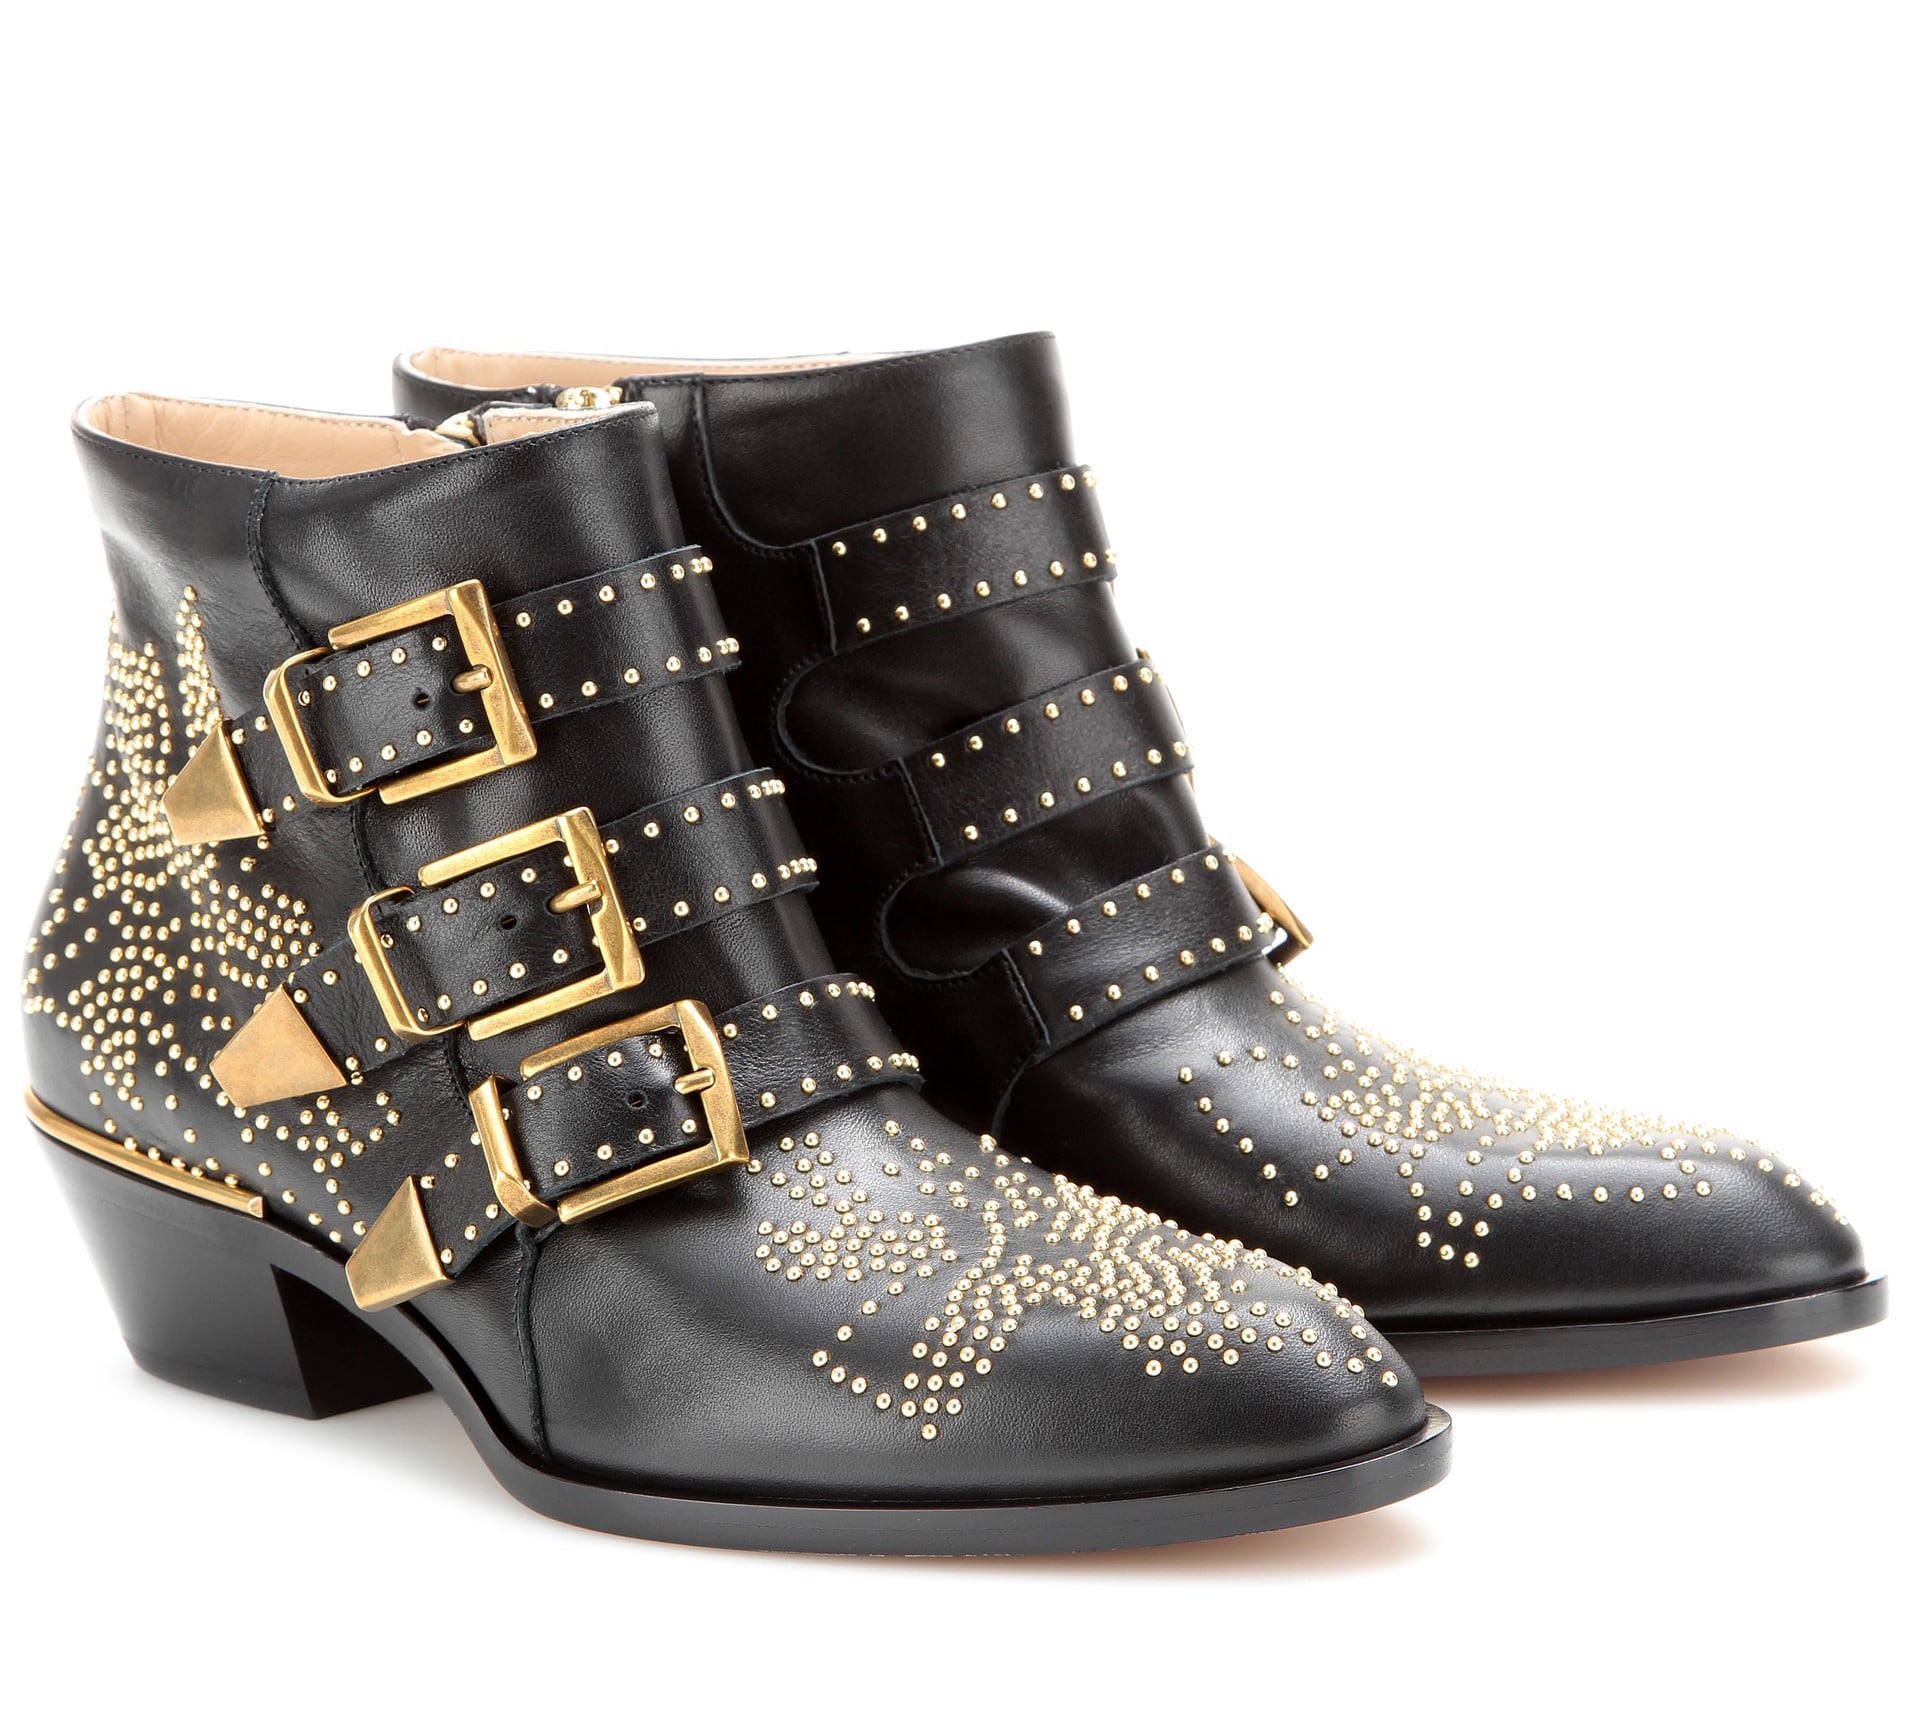 Chloe Susanna Studded Leather Ankle Boots